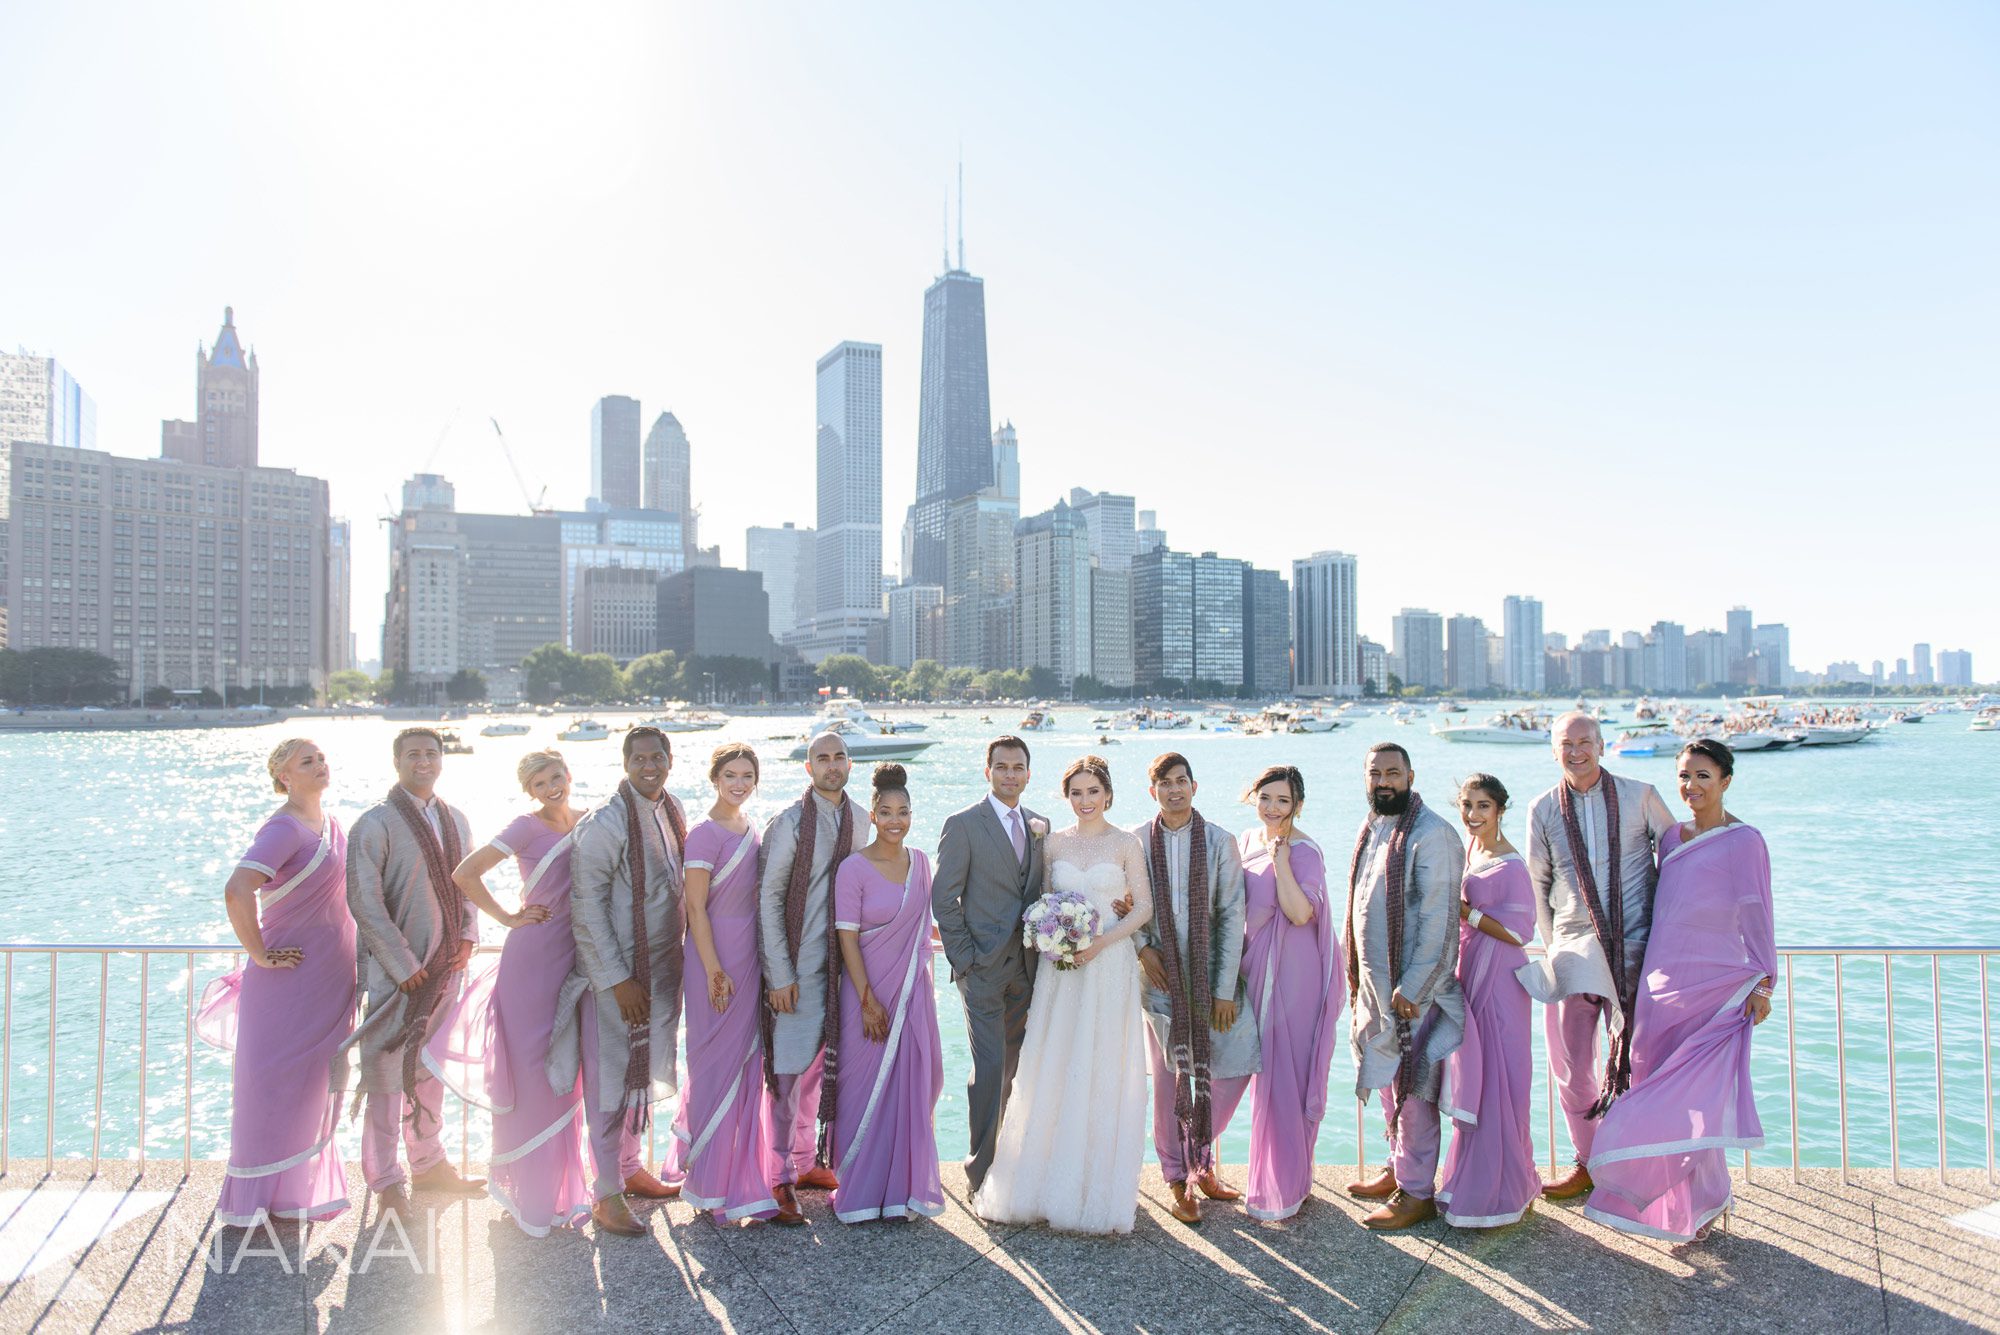 olive park wedding pictures Chicago skyline